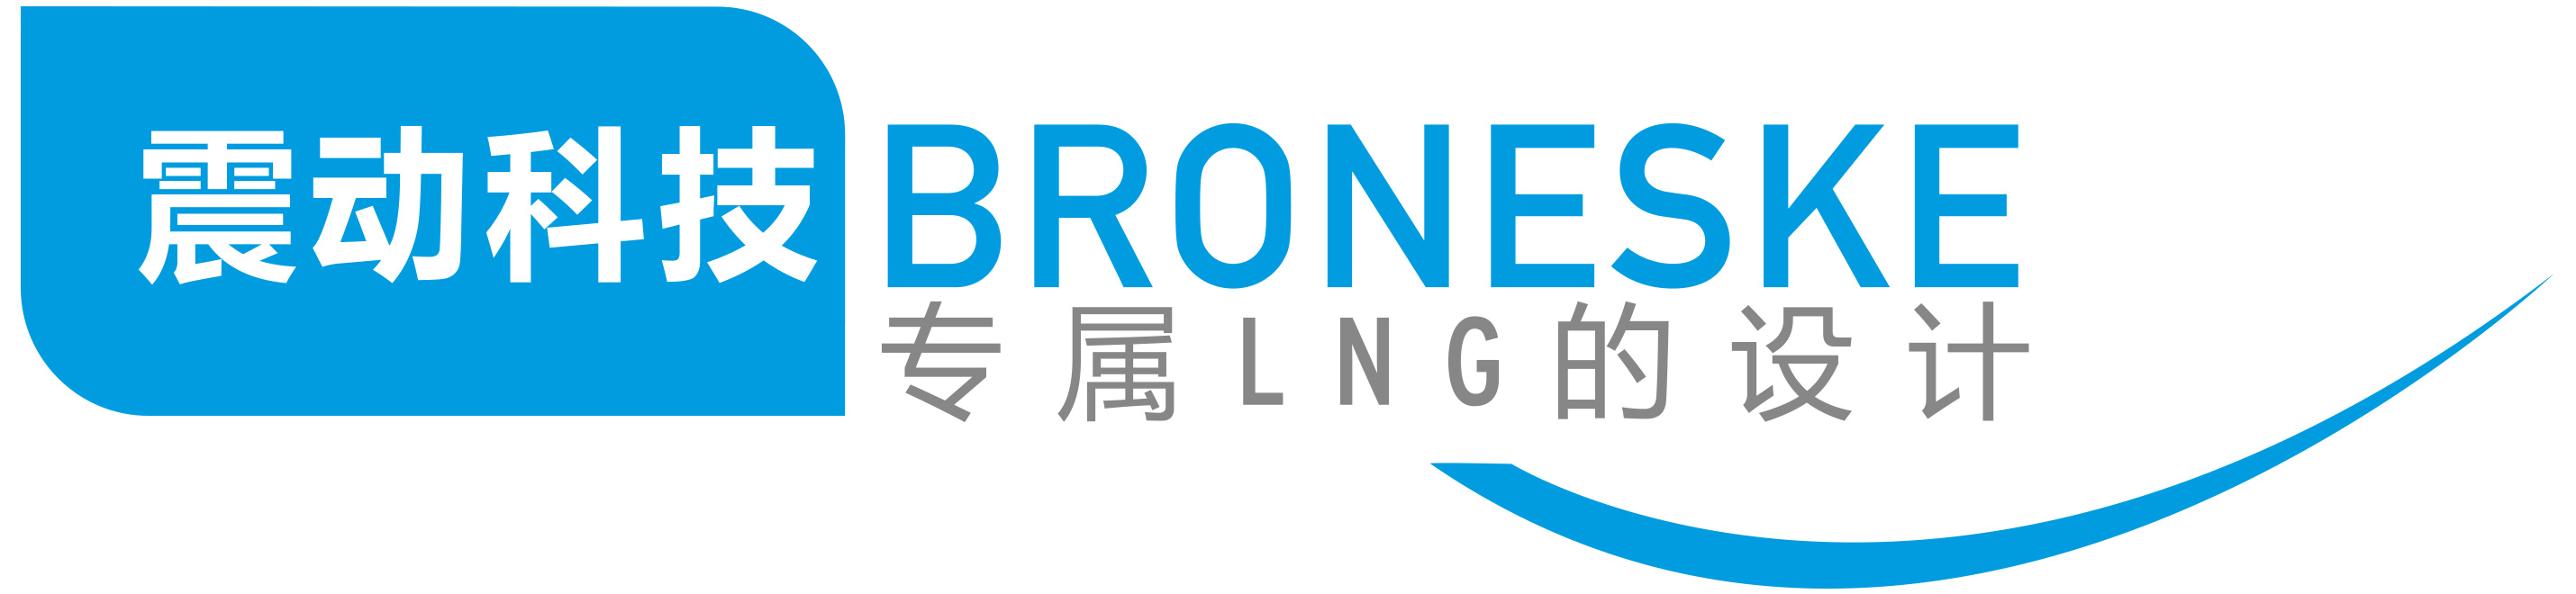 logo lng sb broneske cn